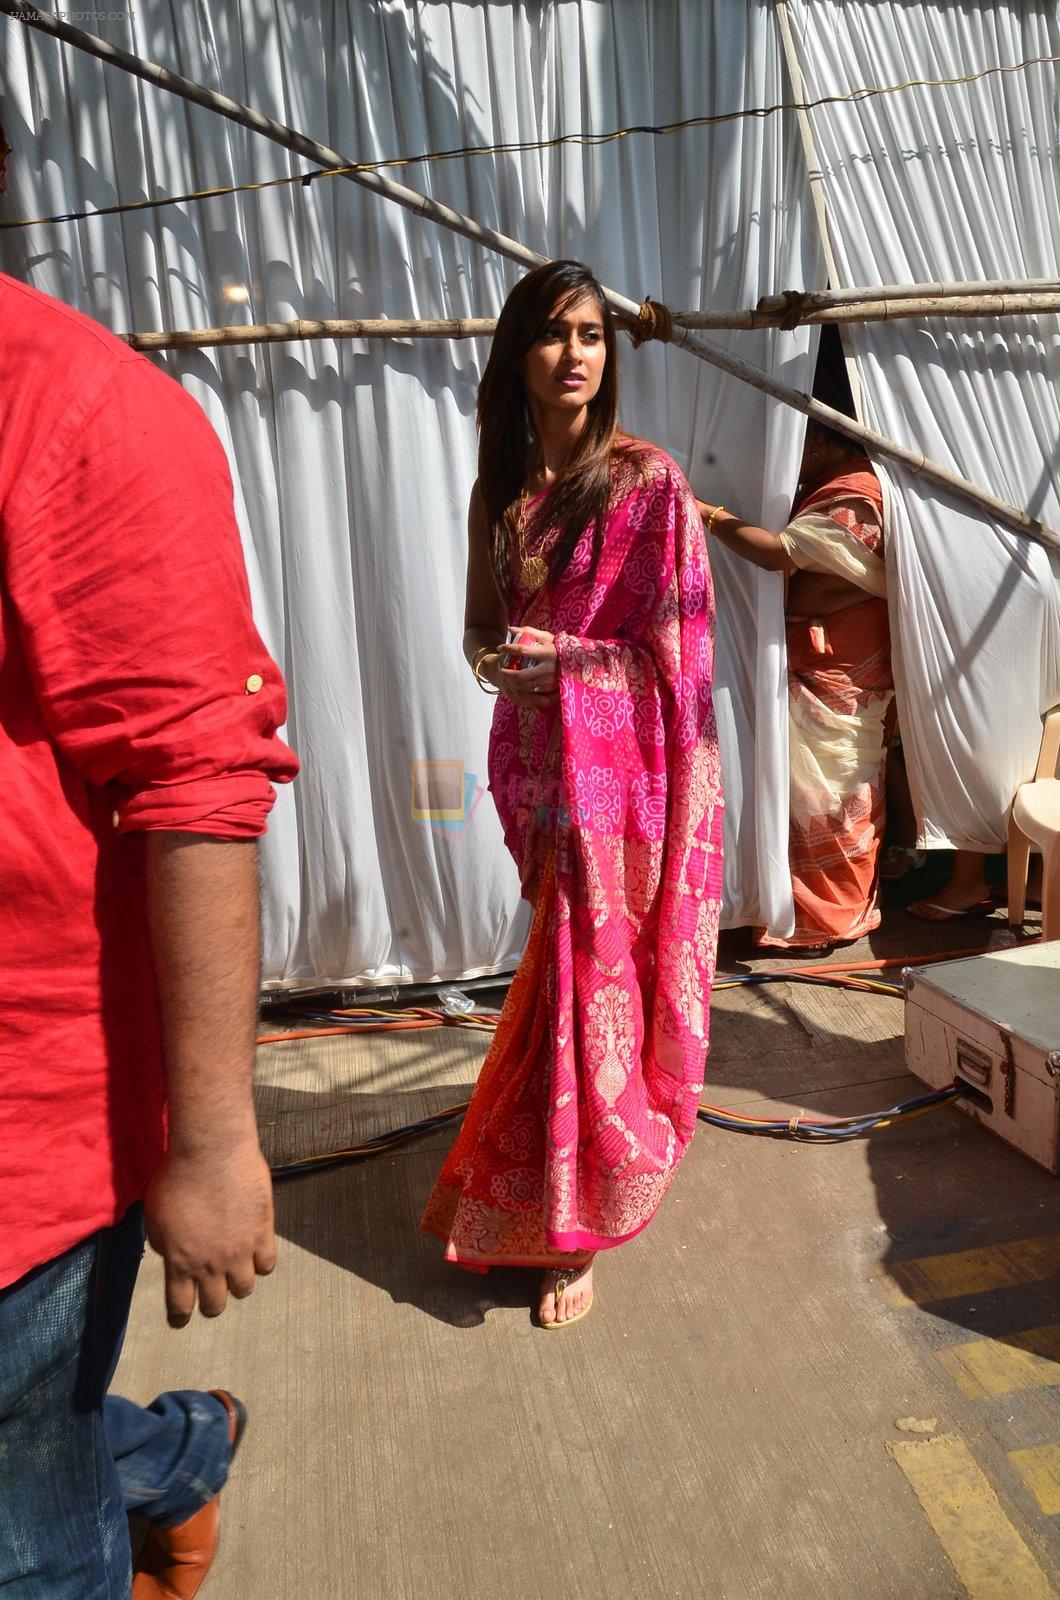 Ileana D'Cruz at Anurag Basu's saraswati pooja in Mumbai on 25th Jan 2015